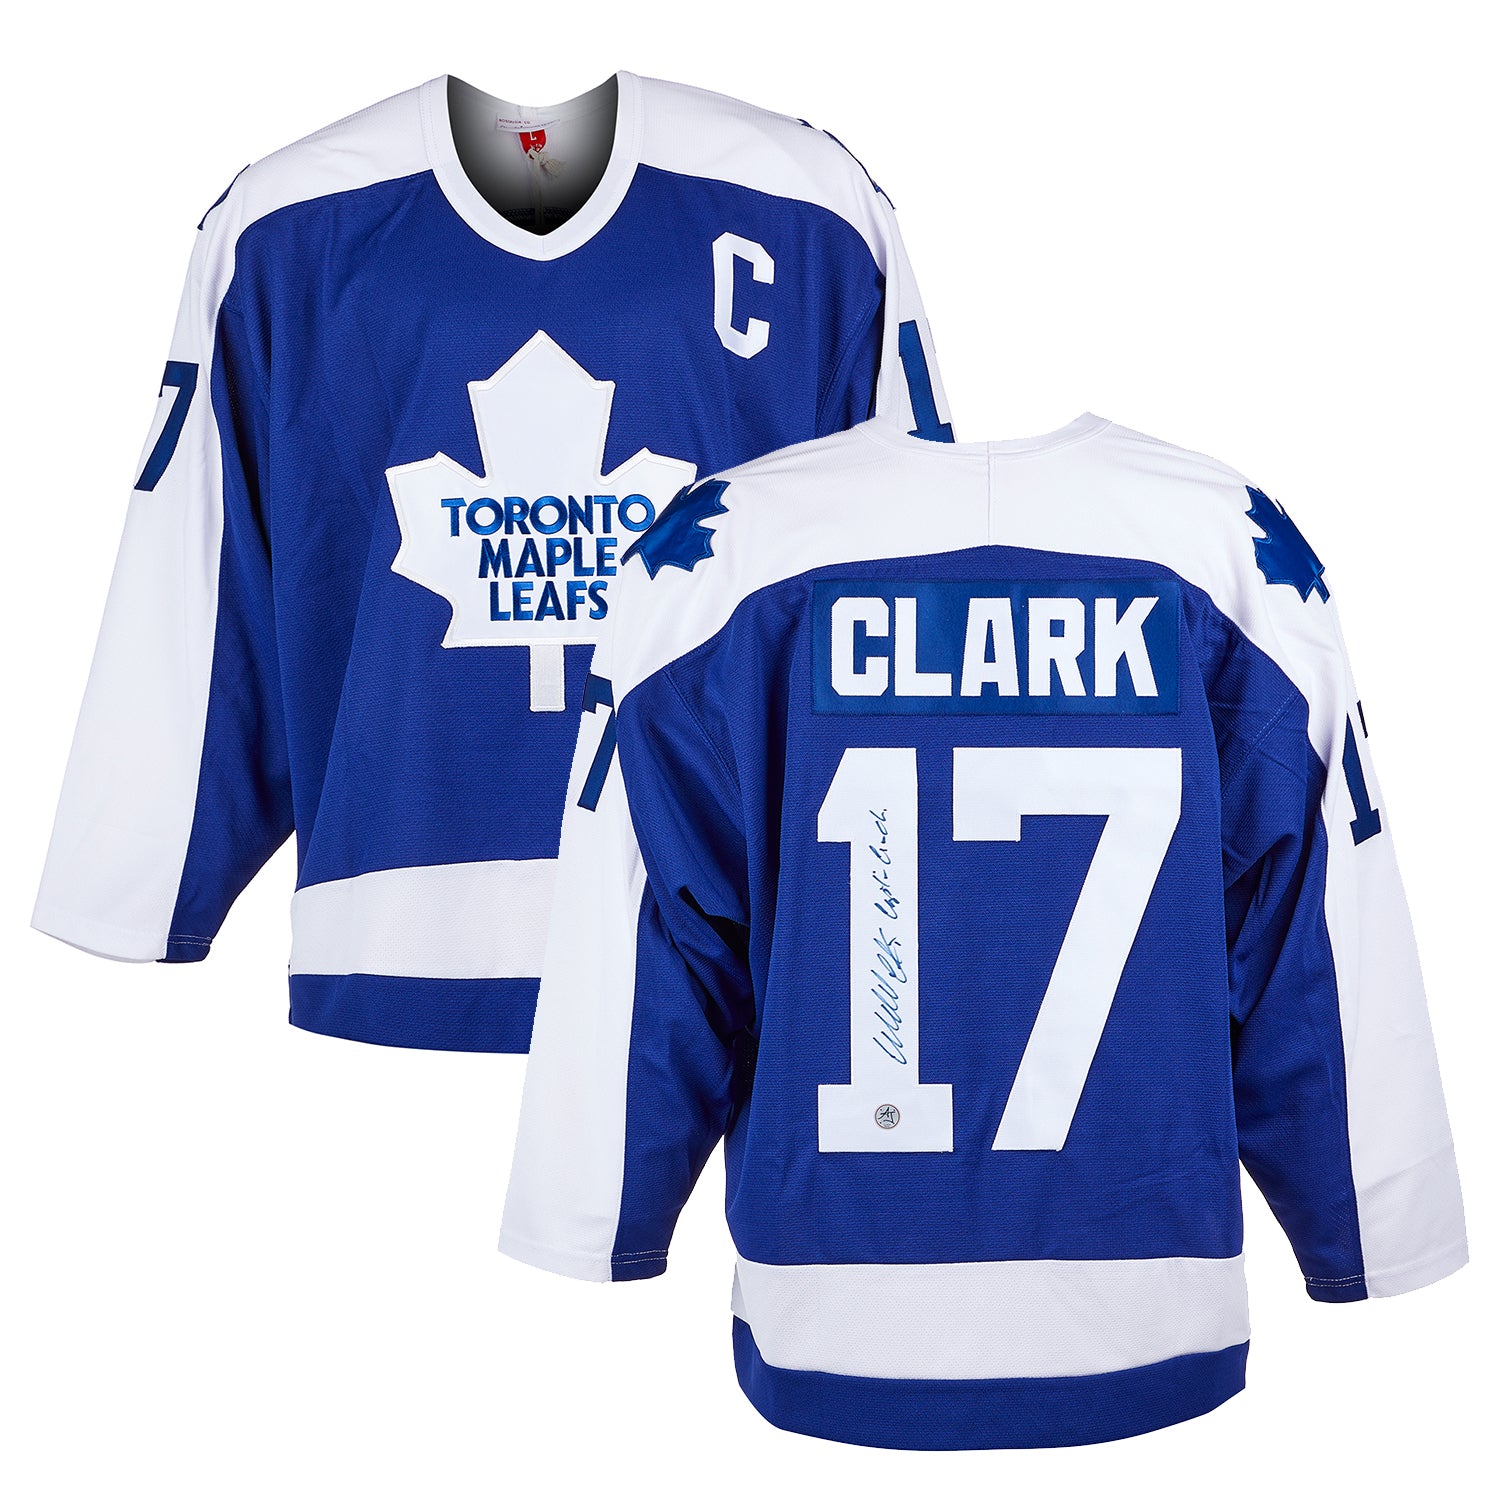 Wendel Clark Jersey, NHL Hockey Throwback Jerseys